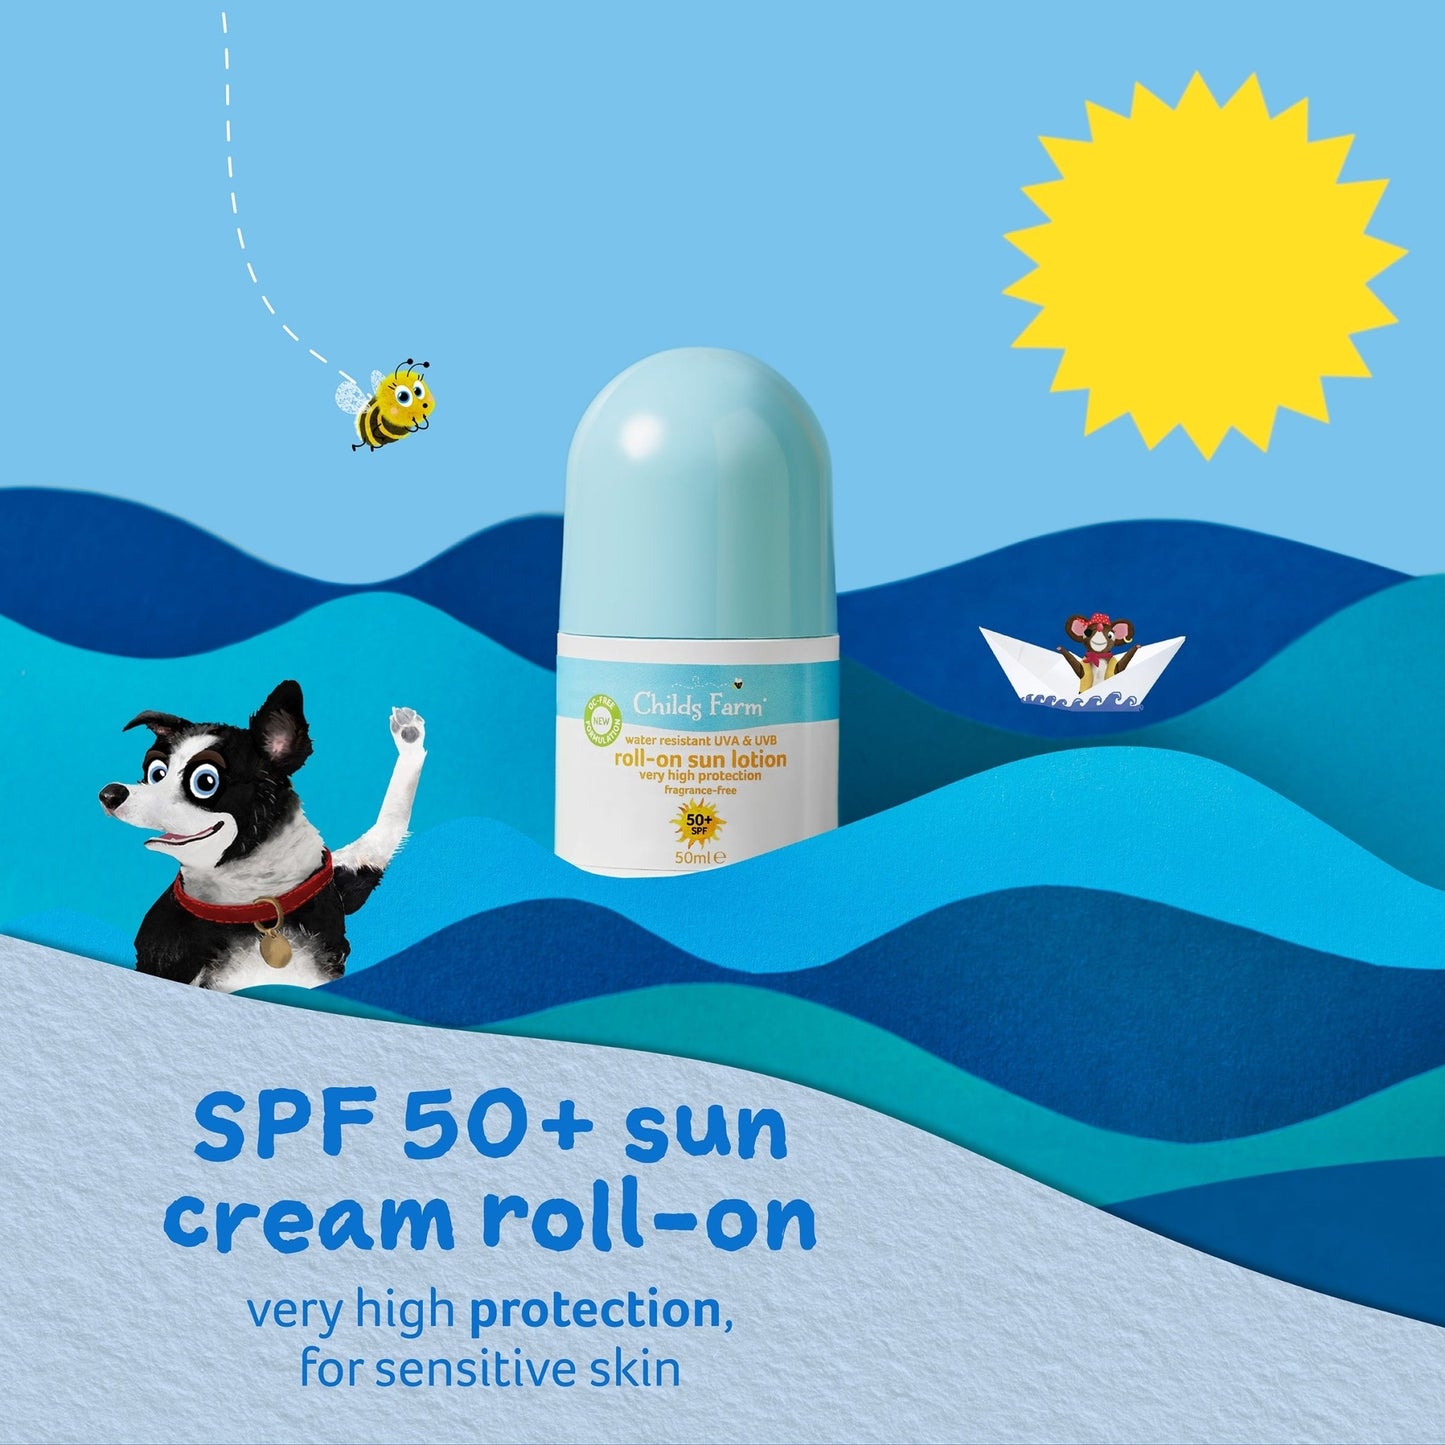 Childs Farm 50+ SPF roll-on sun lotion fragrance-free (DACH)